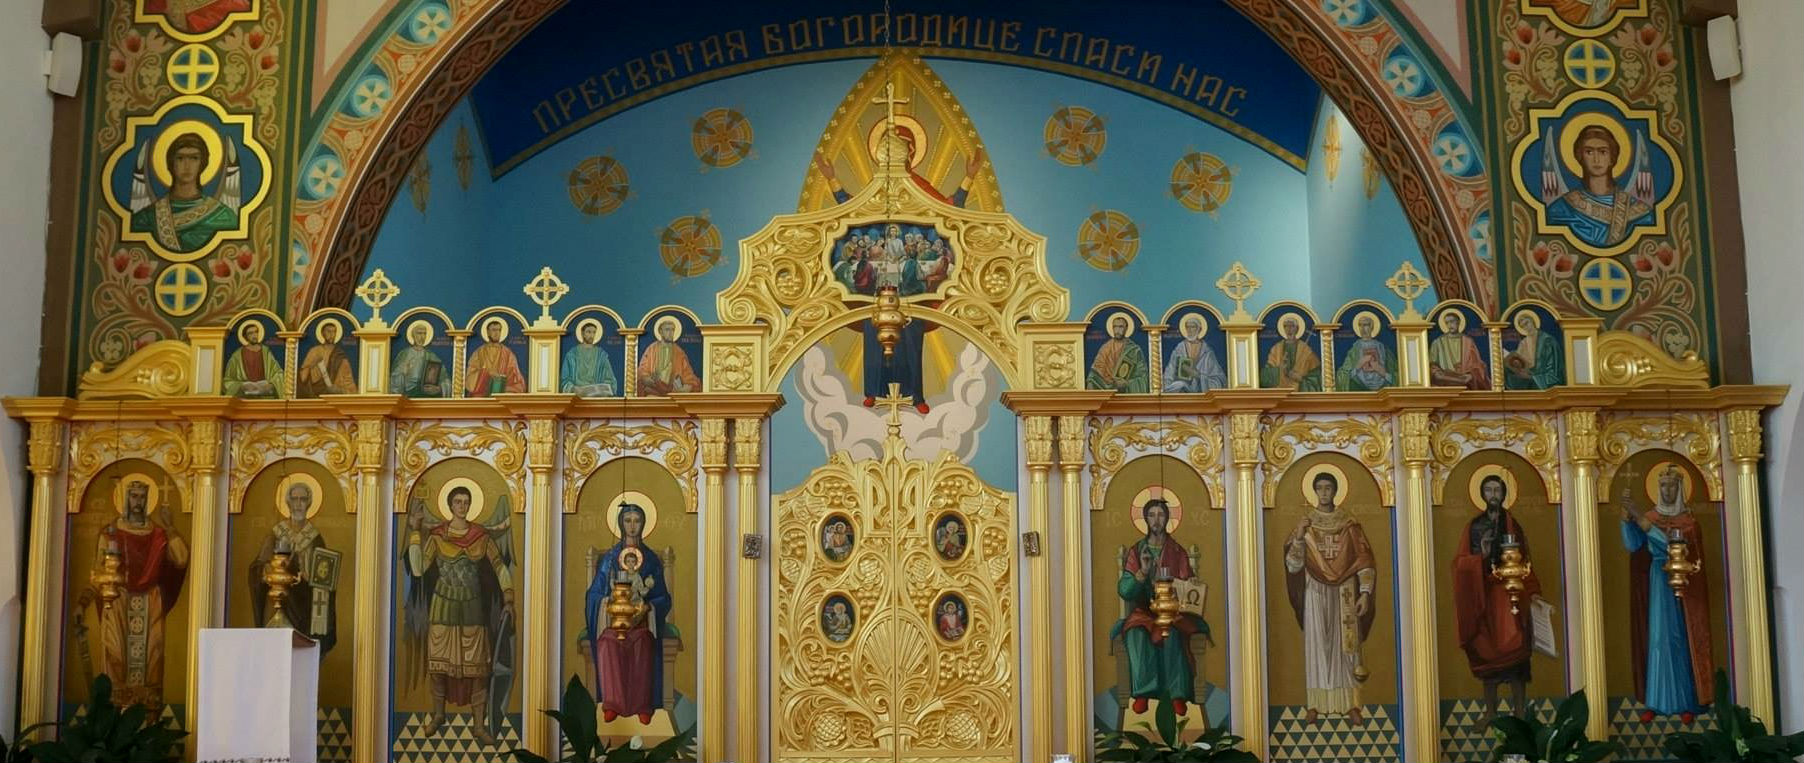 Ukrainian Catholic Church, L.A.